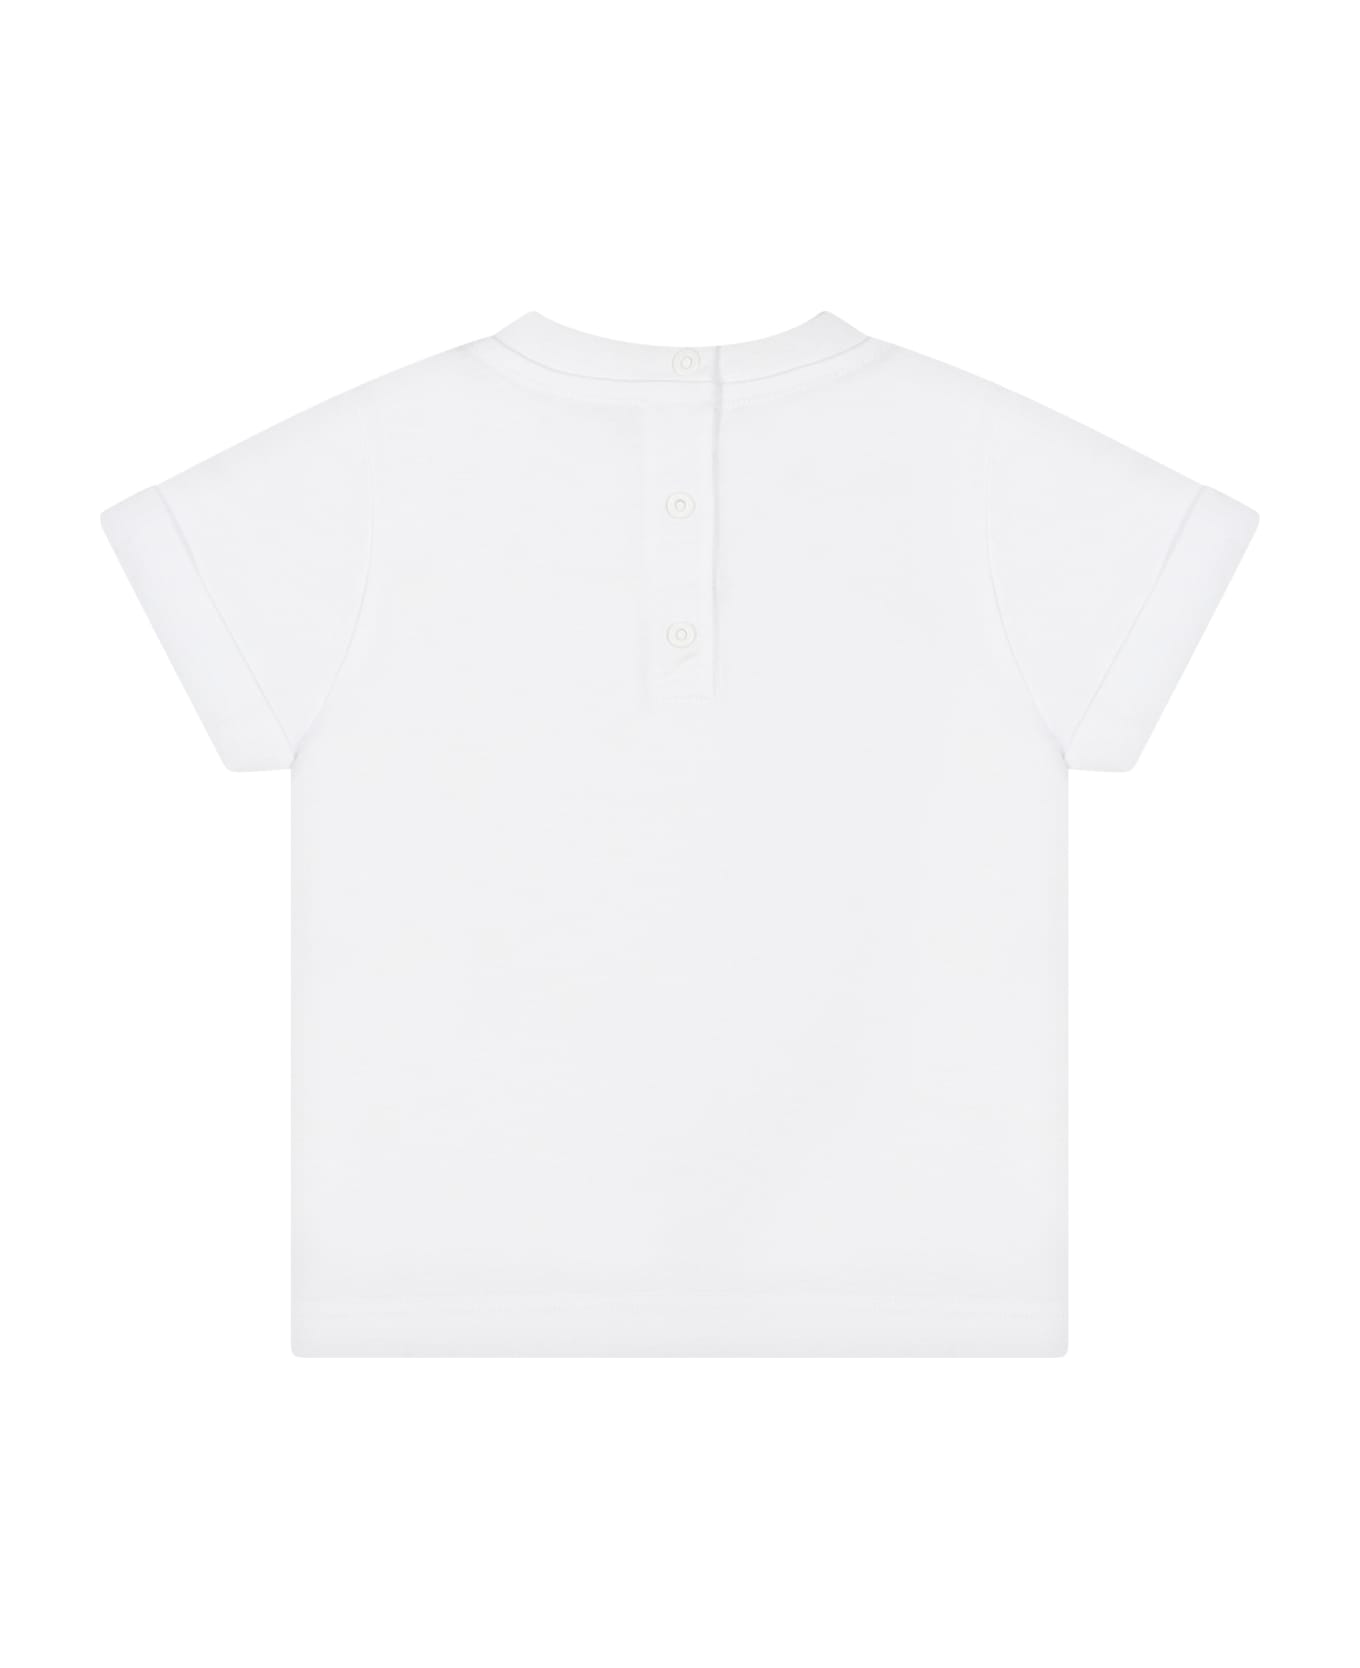 Balmain White T-shirt With Iconic Black Logo For Babies - White